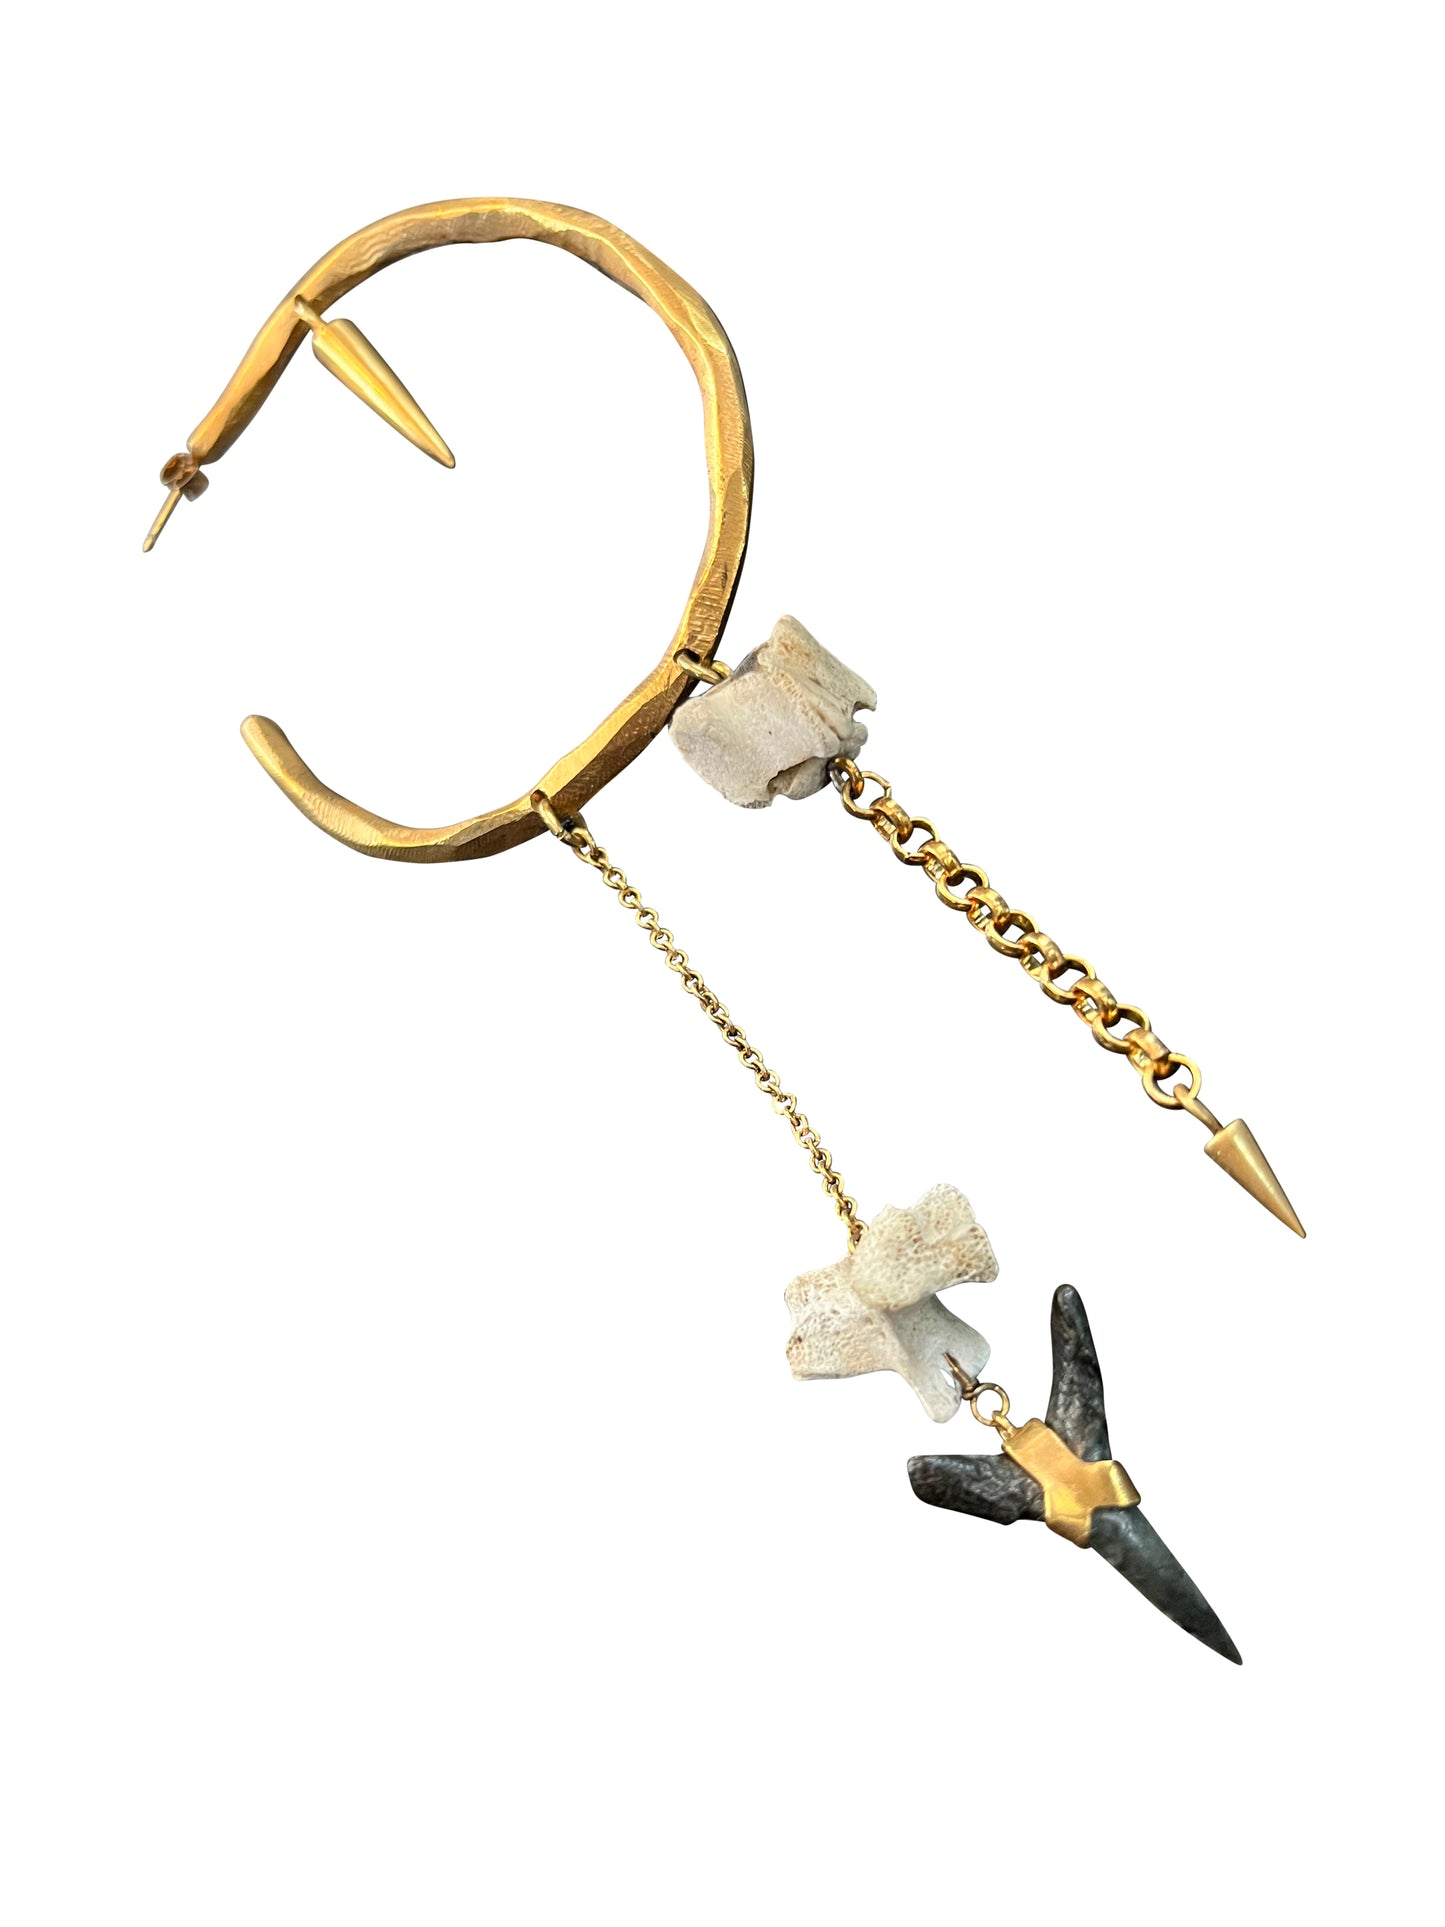 Brass Hoop Earring with Bone and Shark Teeth